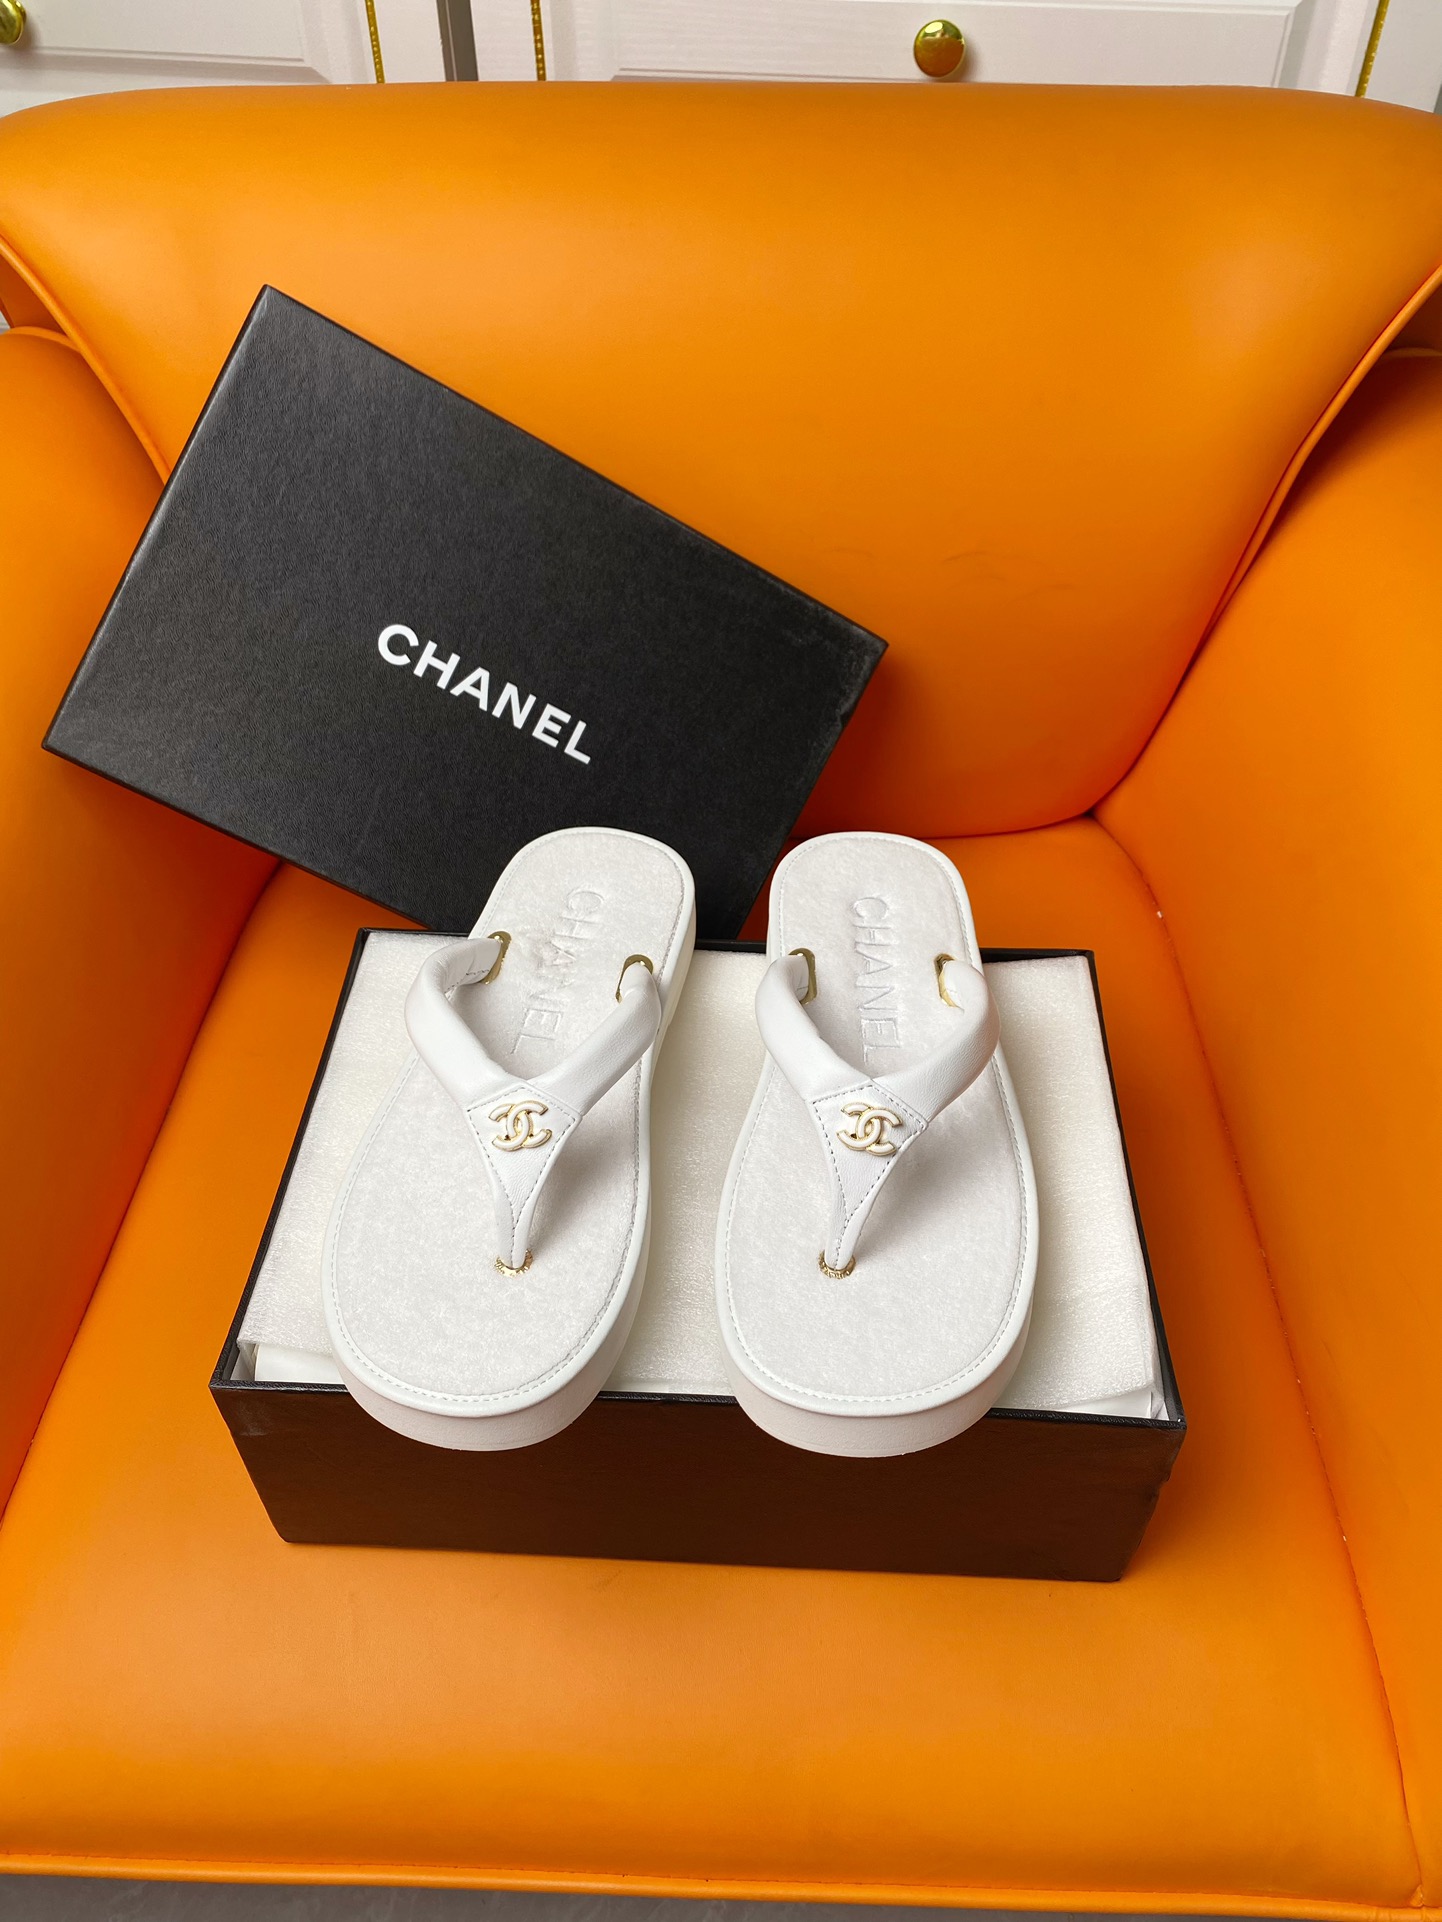 Chanel Shoes Flip Flops Slippers Sheepskin Summer Collection Beach